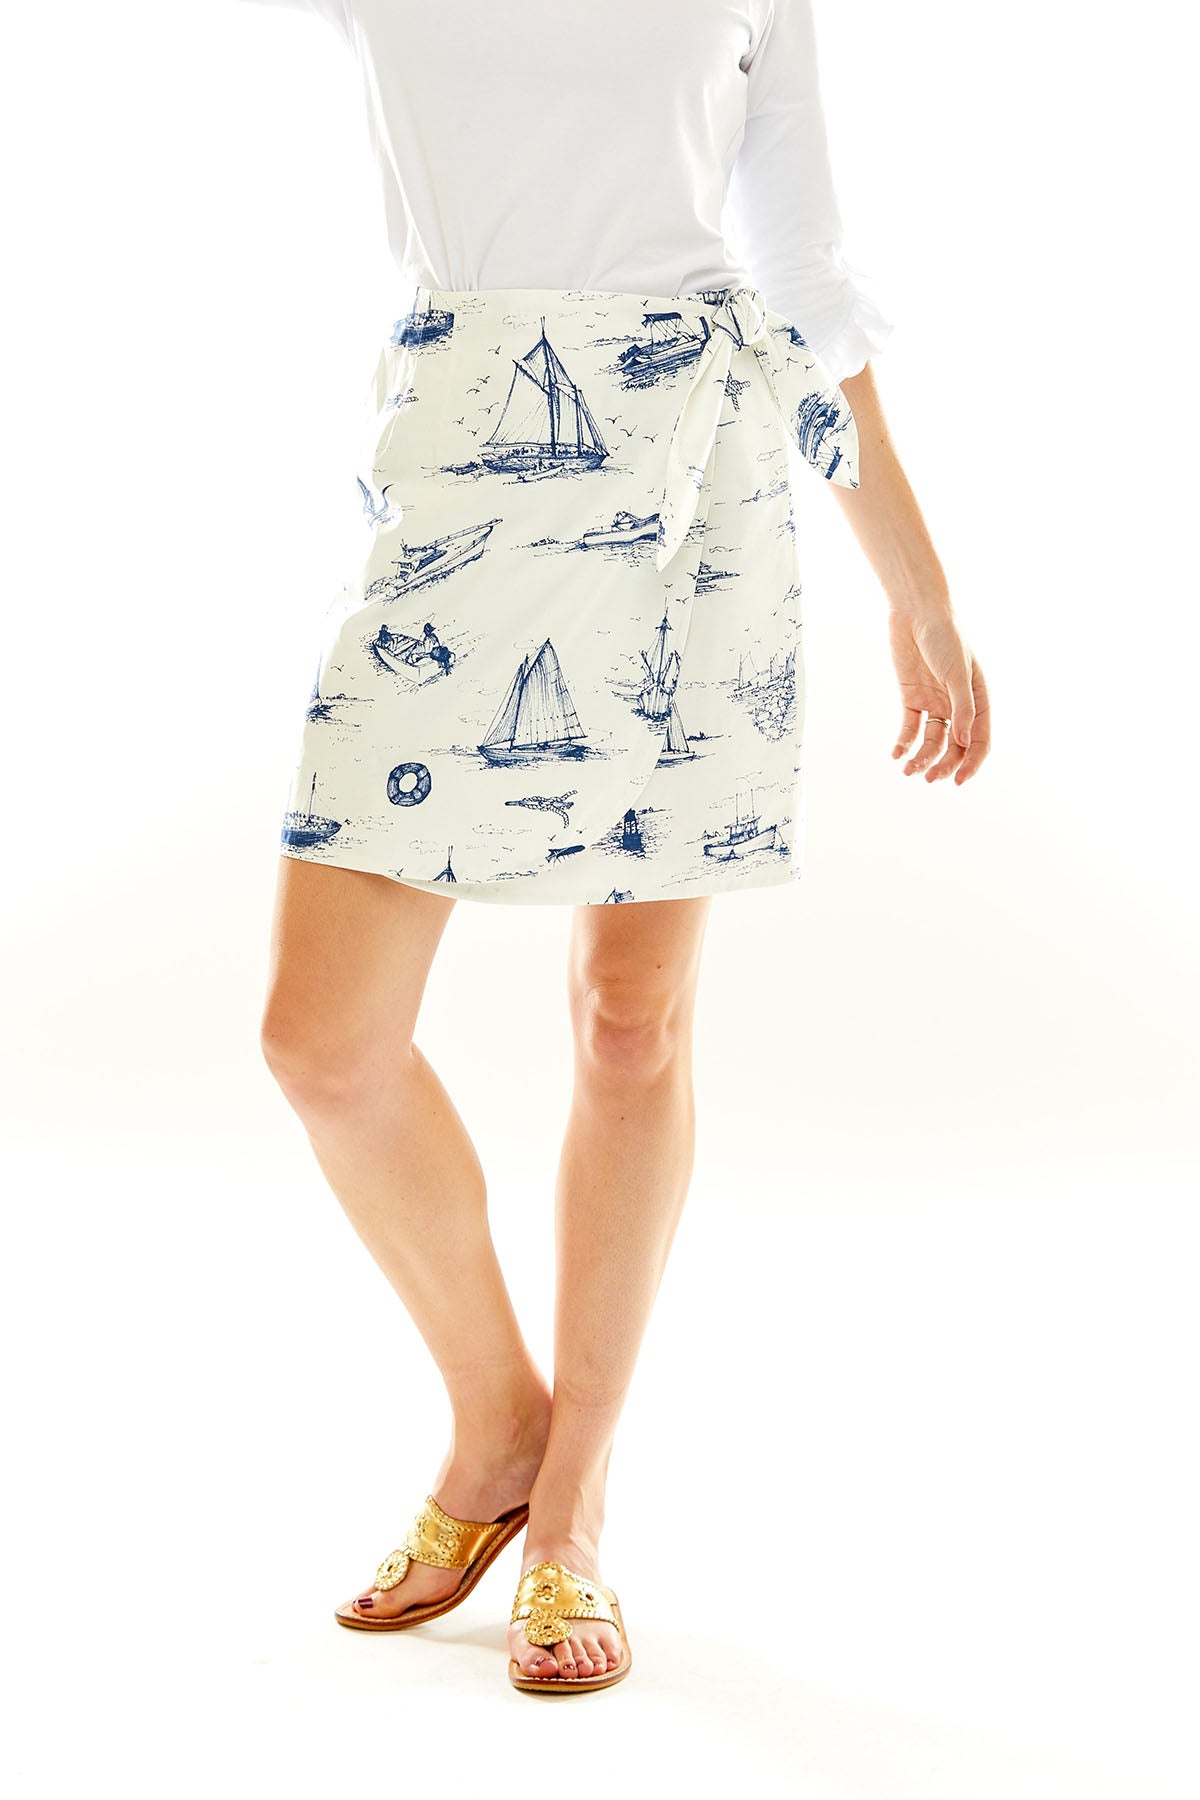 Woman in nautical toile skirt